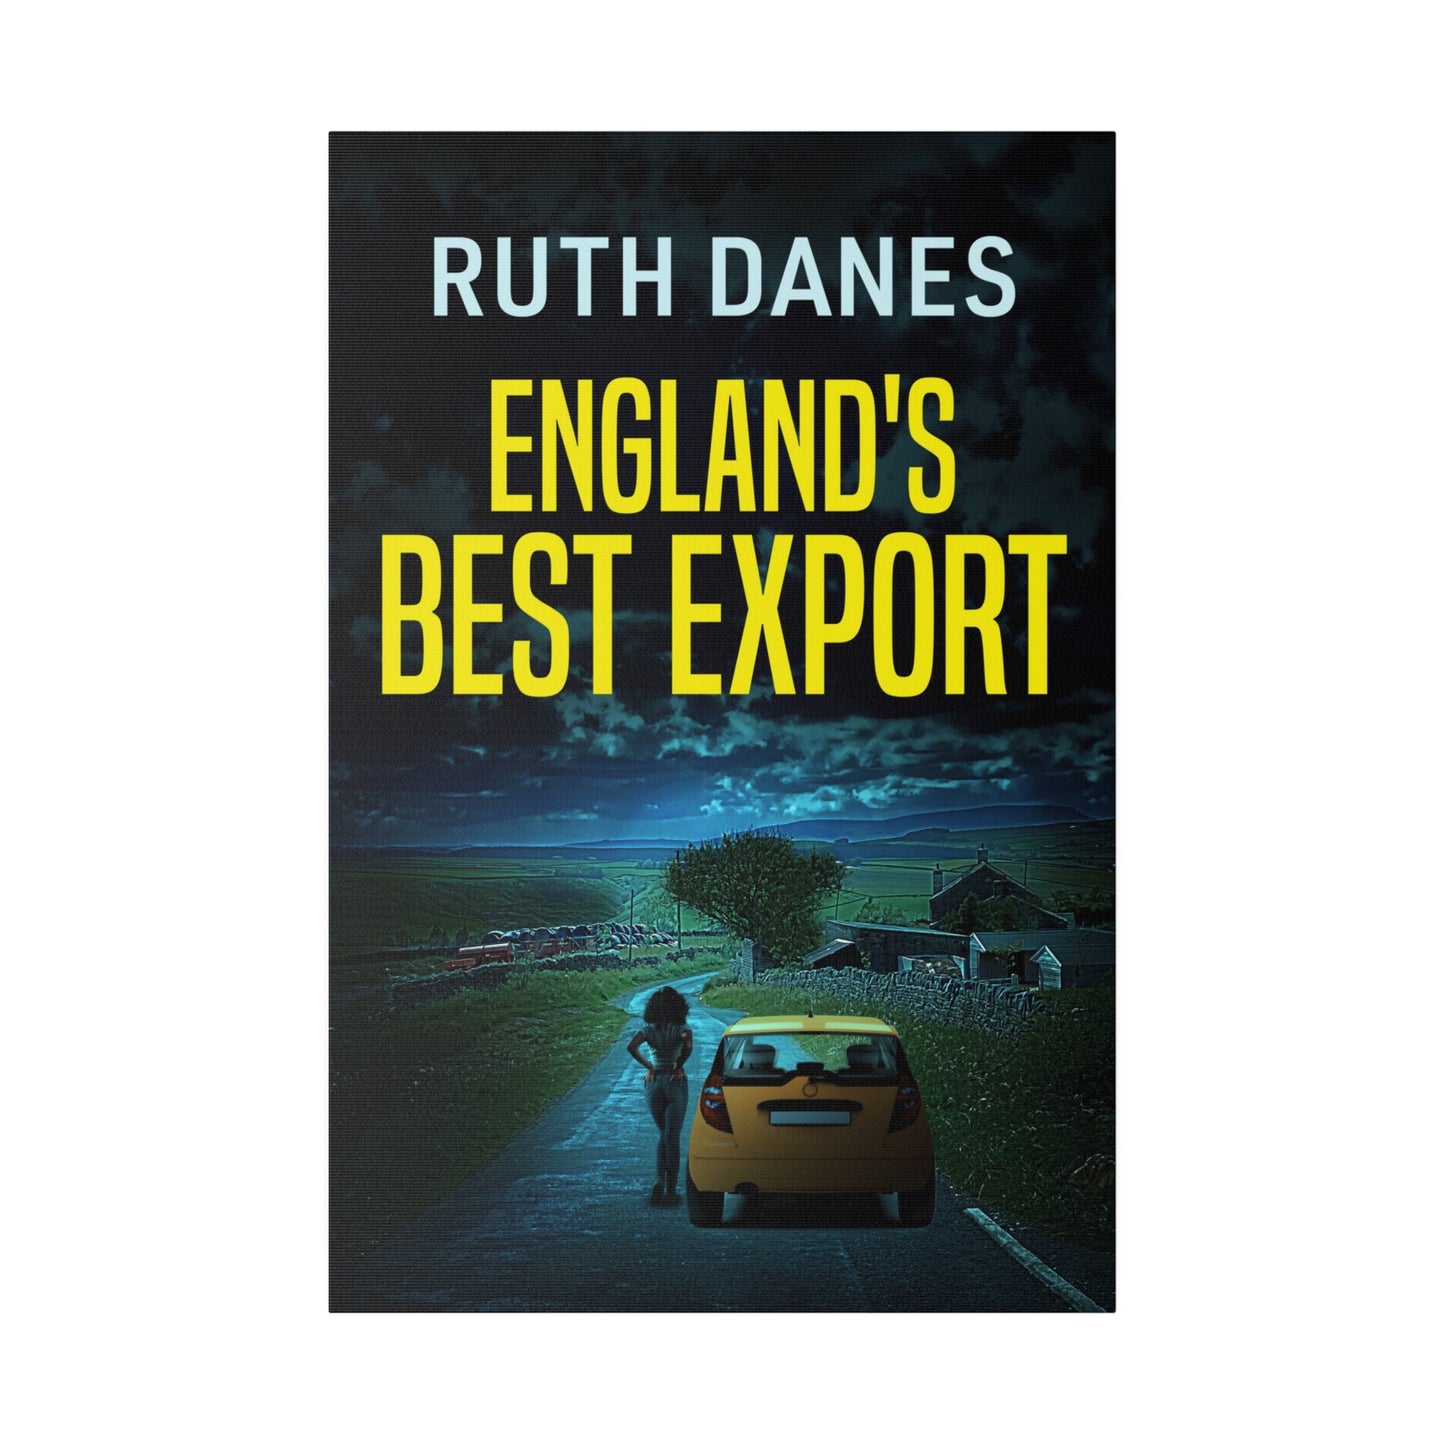 England's Best Export - Canvas